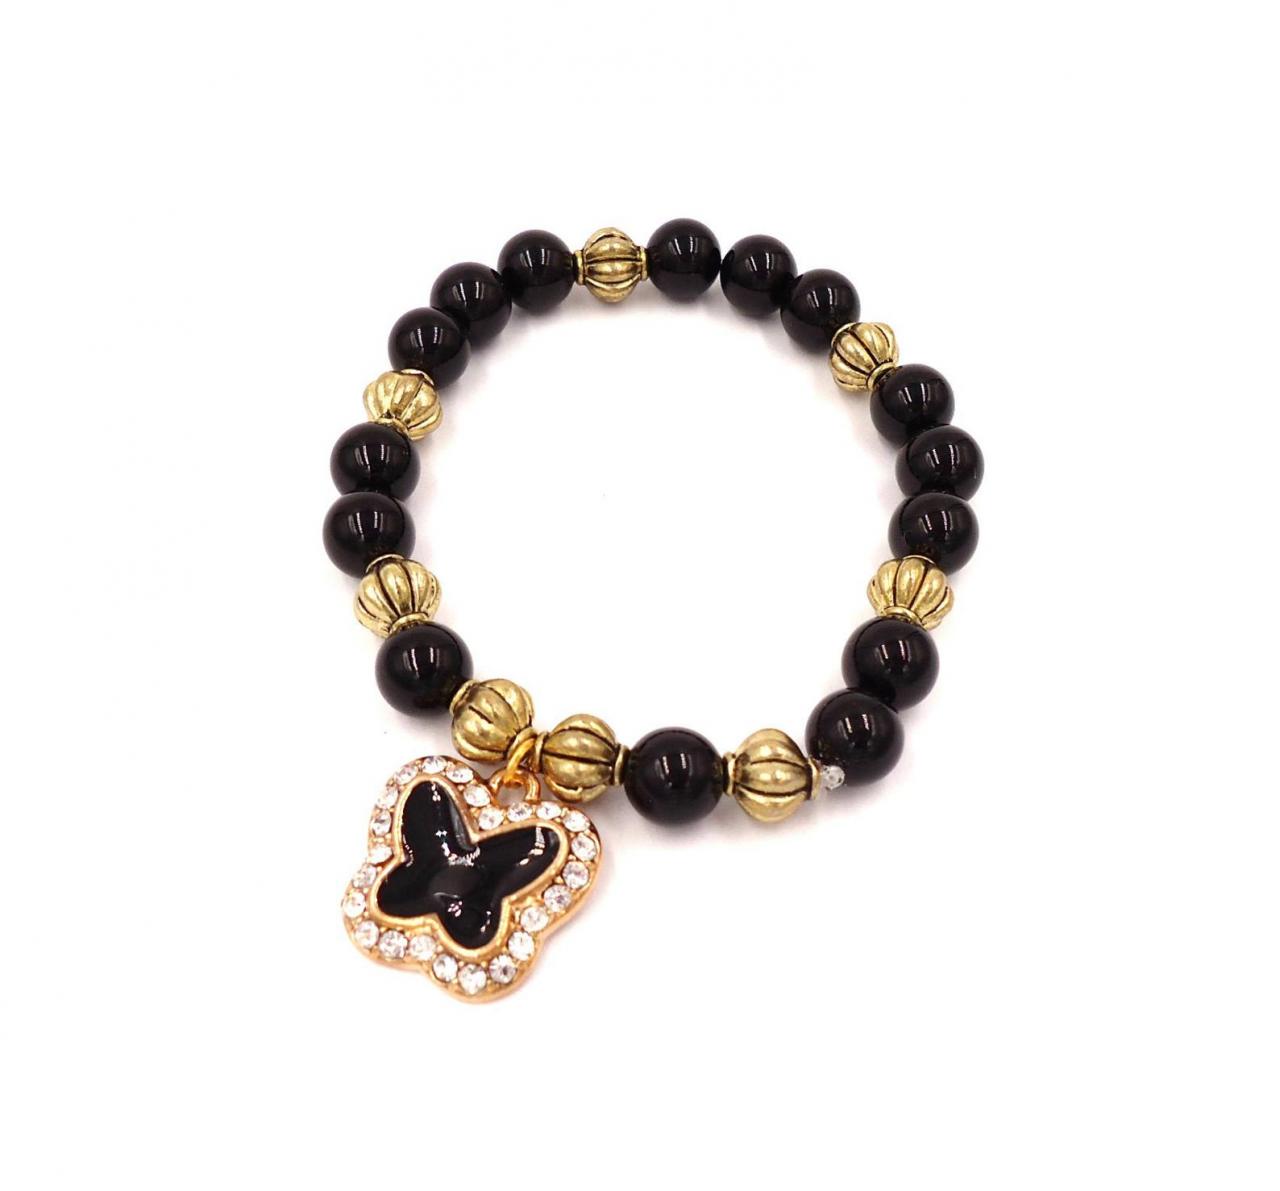 Black Agate Bracelet - Butterfly Charm Bracelet - Crystal Bracelet - Healing Stones - Women Charm Bracelet - Bead Bracelet Gemstone Bracelet